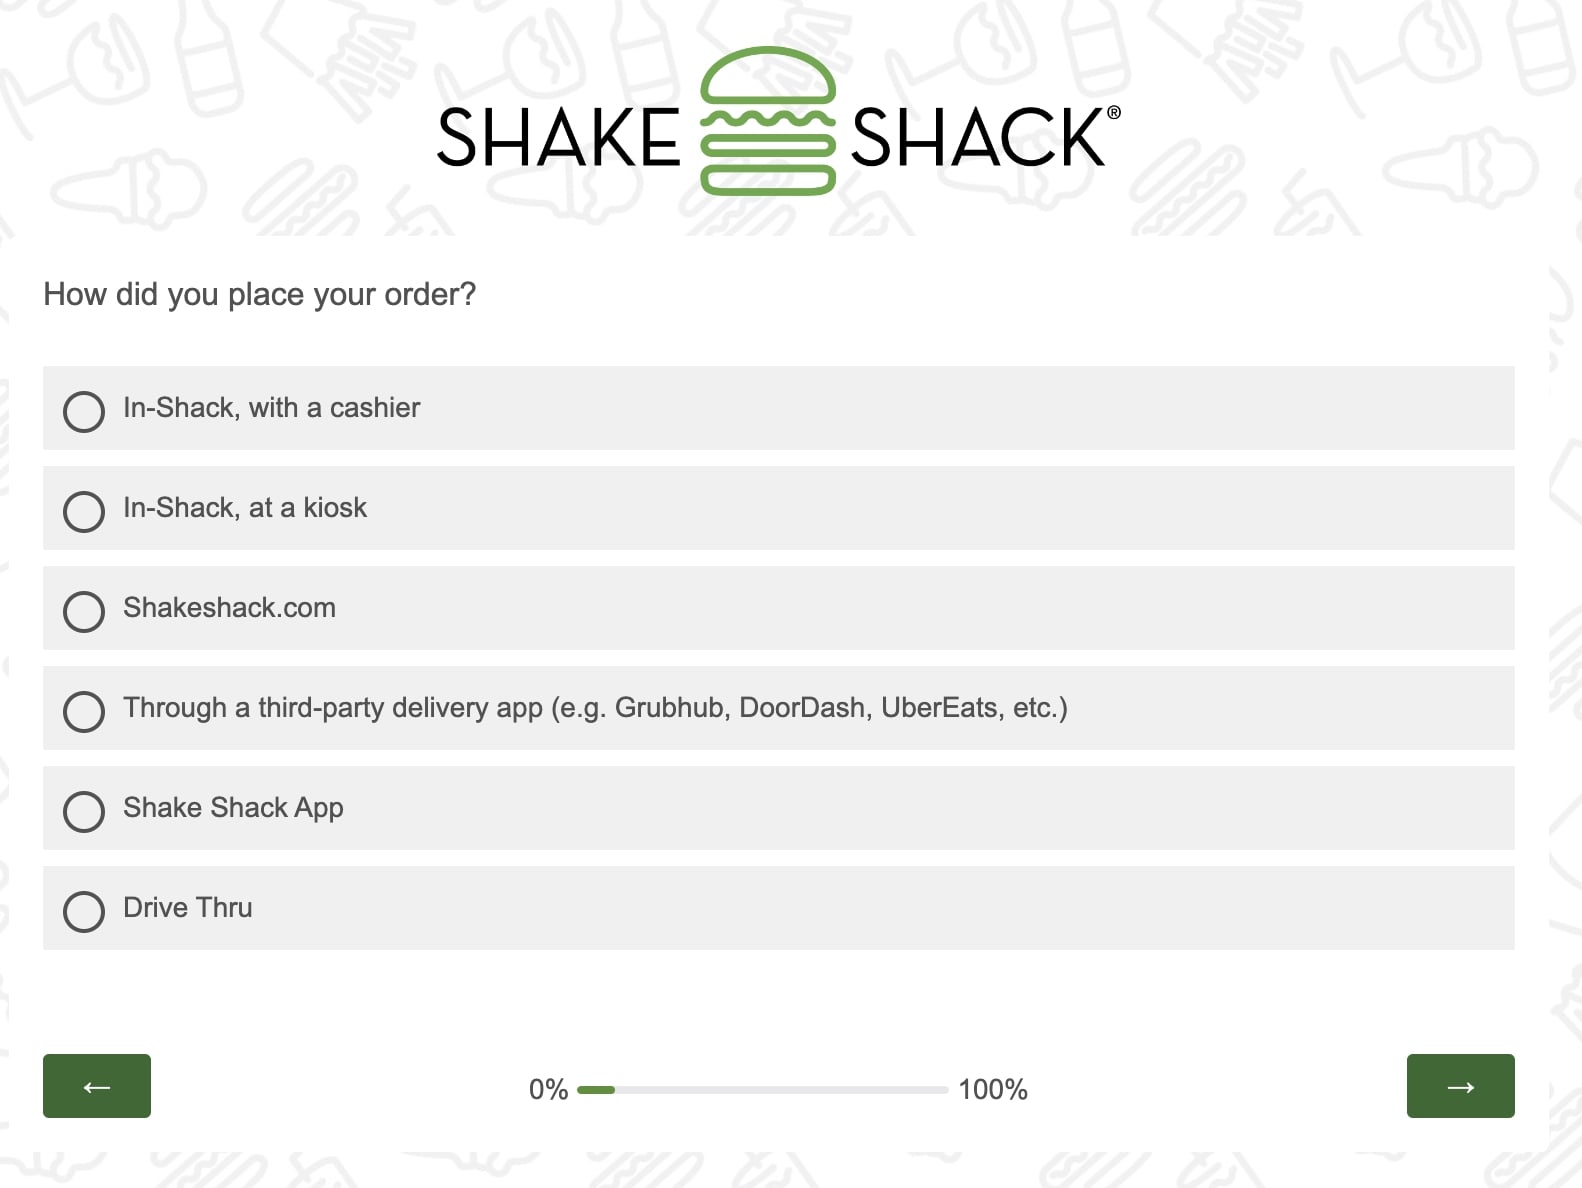 Shake Shack FEEDBACK Survey